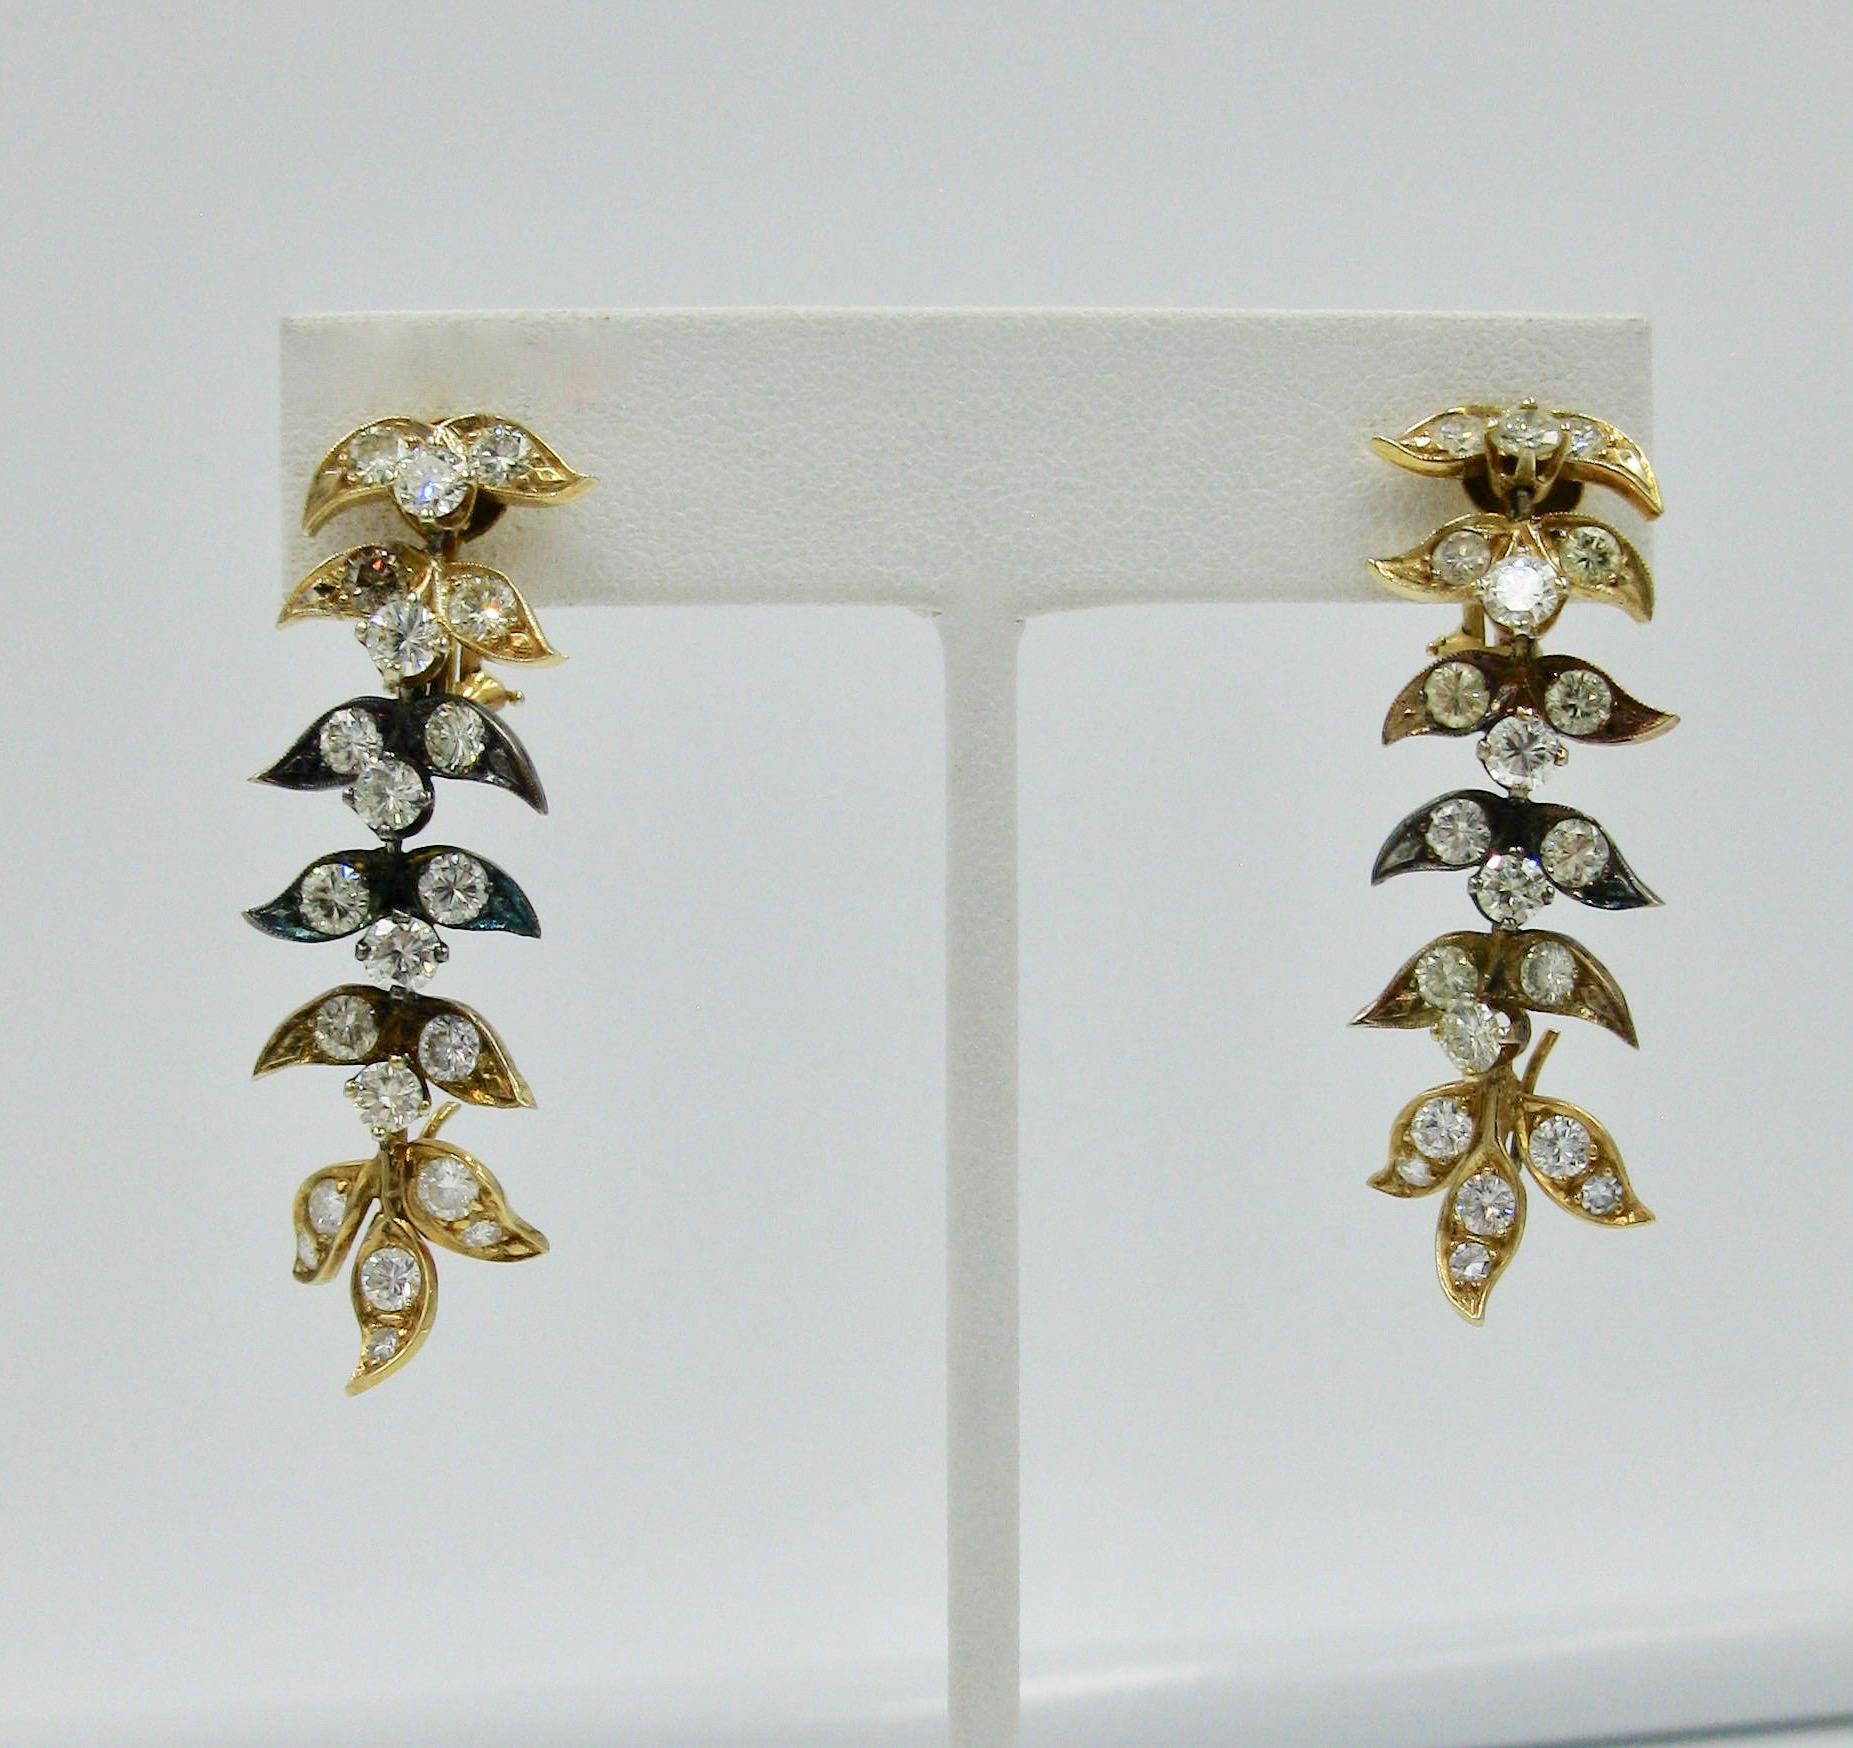 1 carat diamond earrings